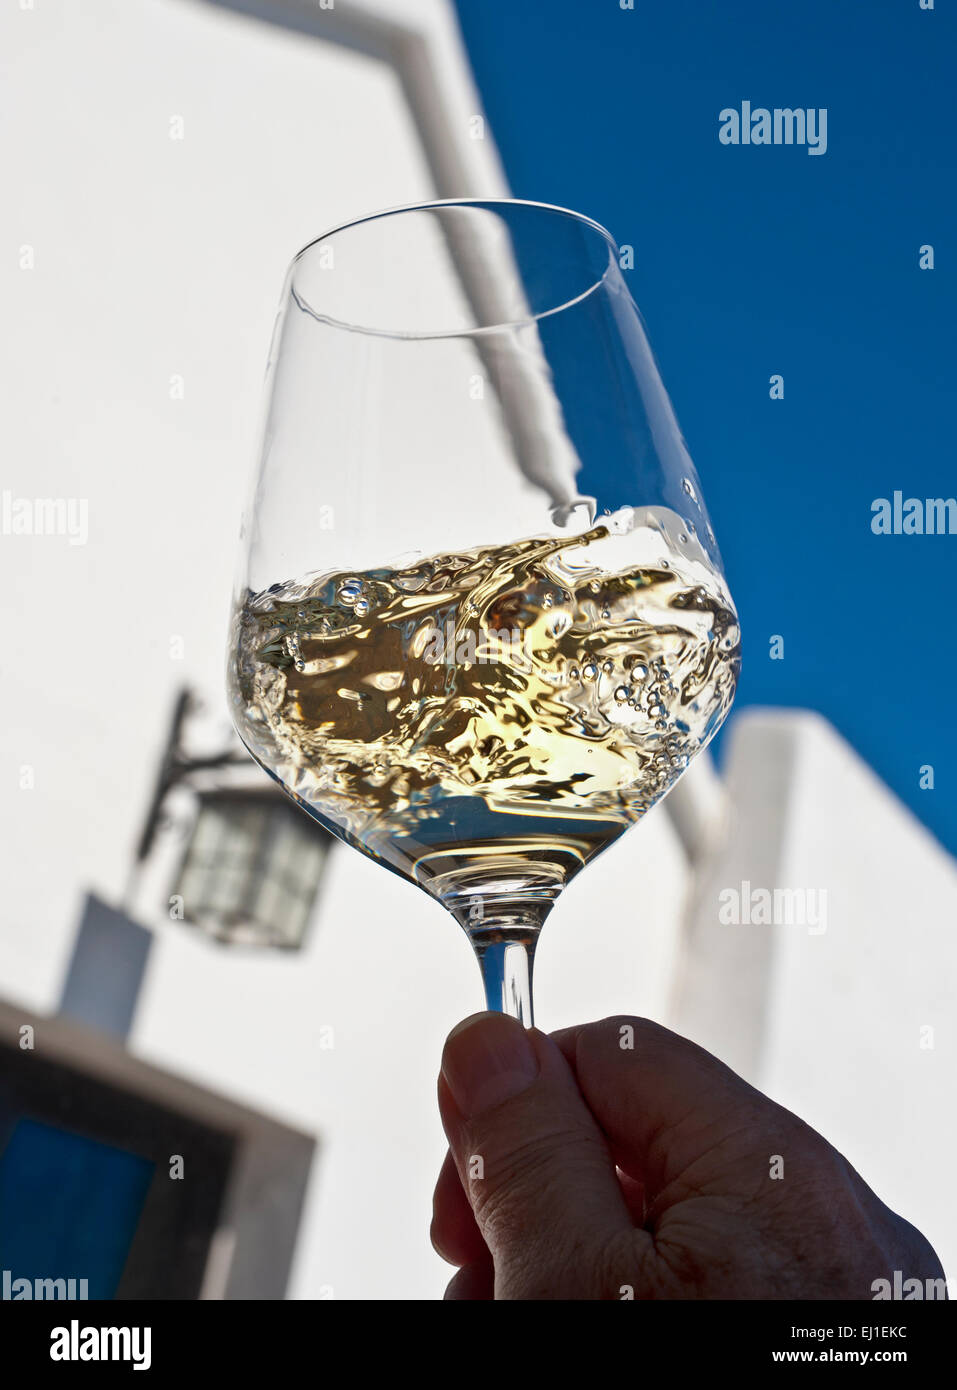 DÉGUSTATION DE VIN BLANC EN plein air PLEIN AIR EN plein air, en train de se faire un moment de dégustation de vin blanc Banque D'Images